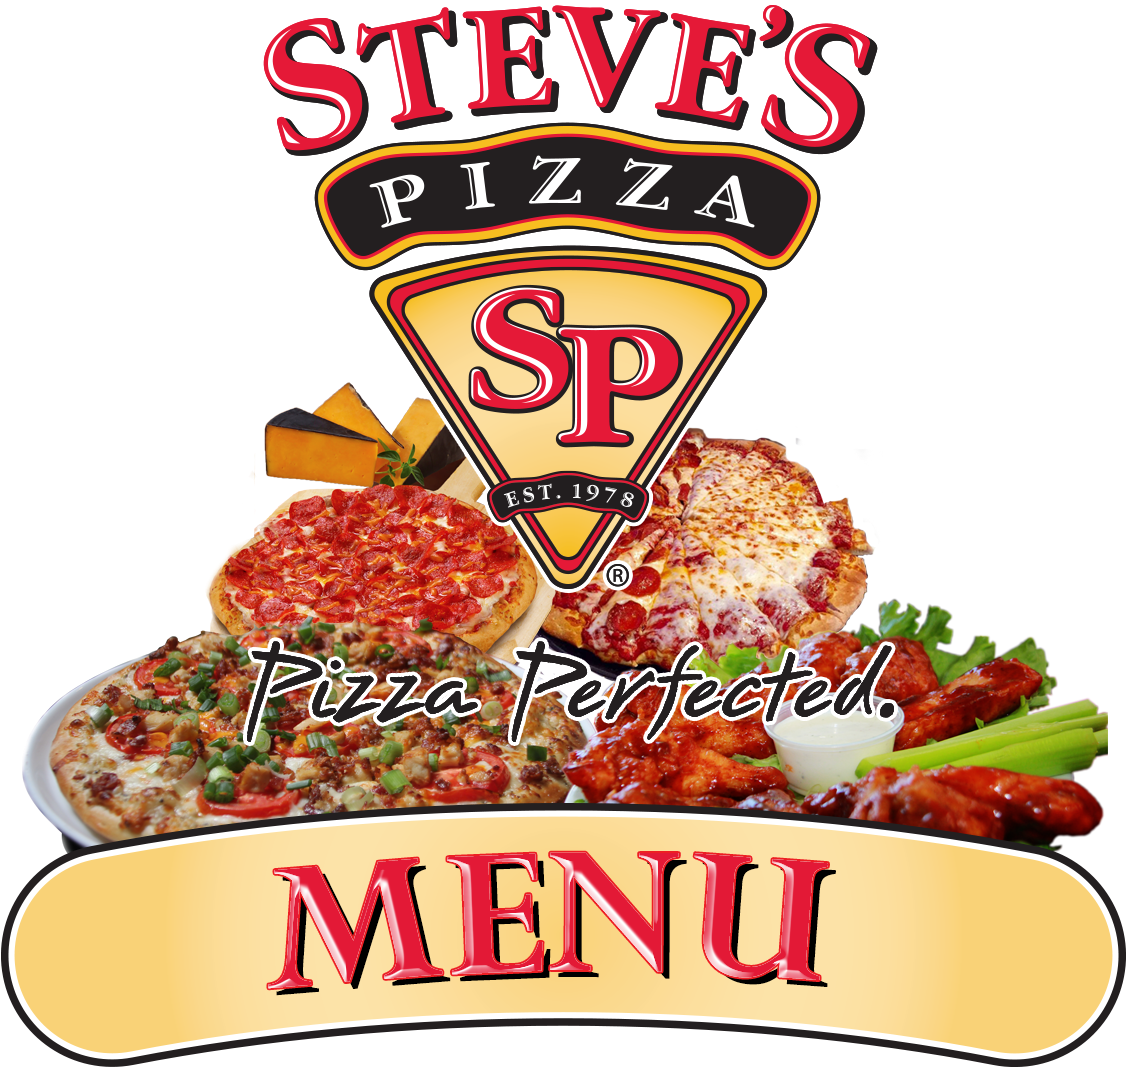 Steves Pizza Menu Sign PNG image